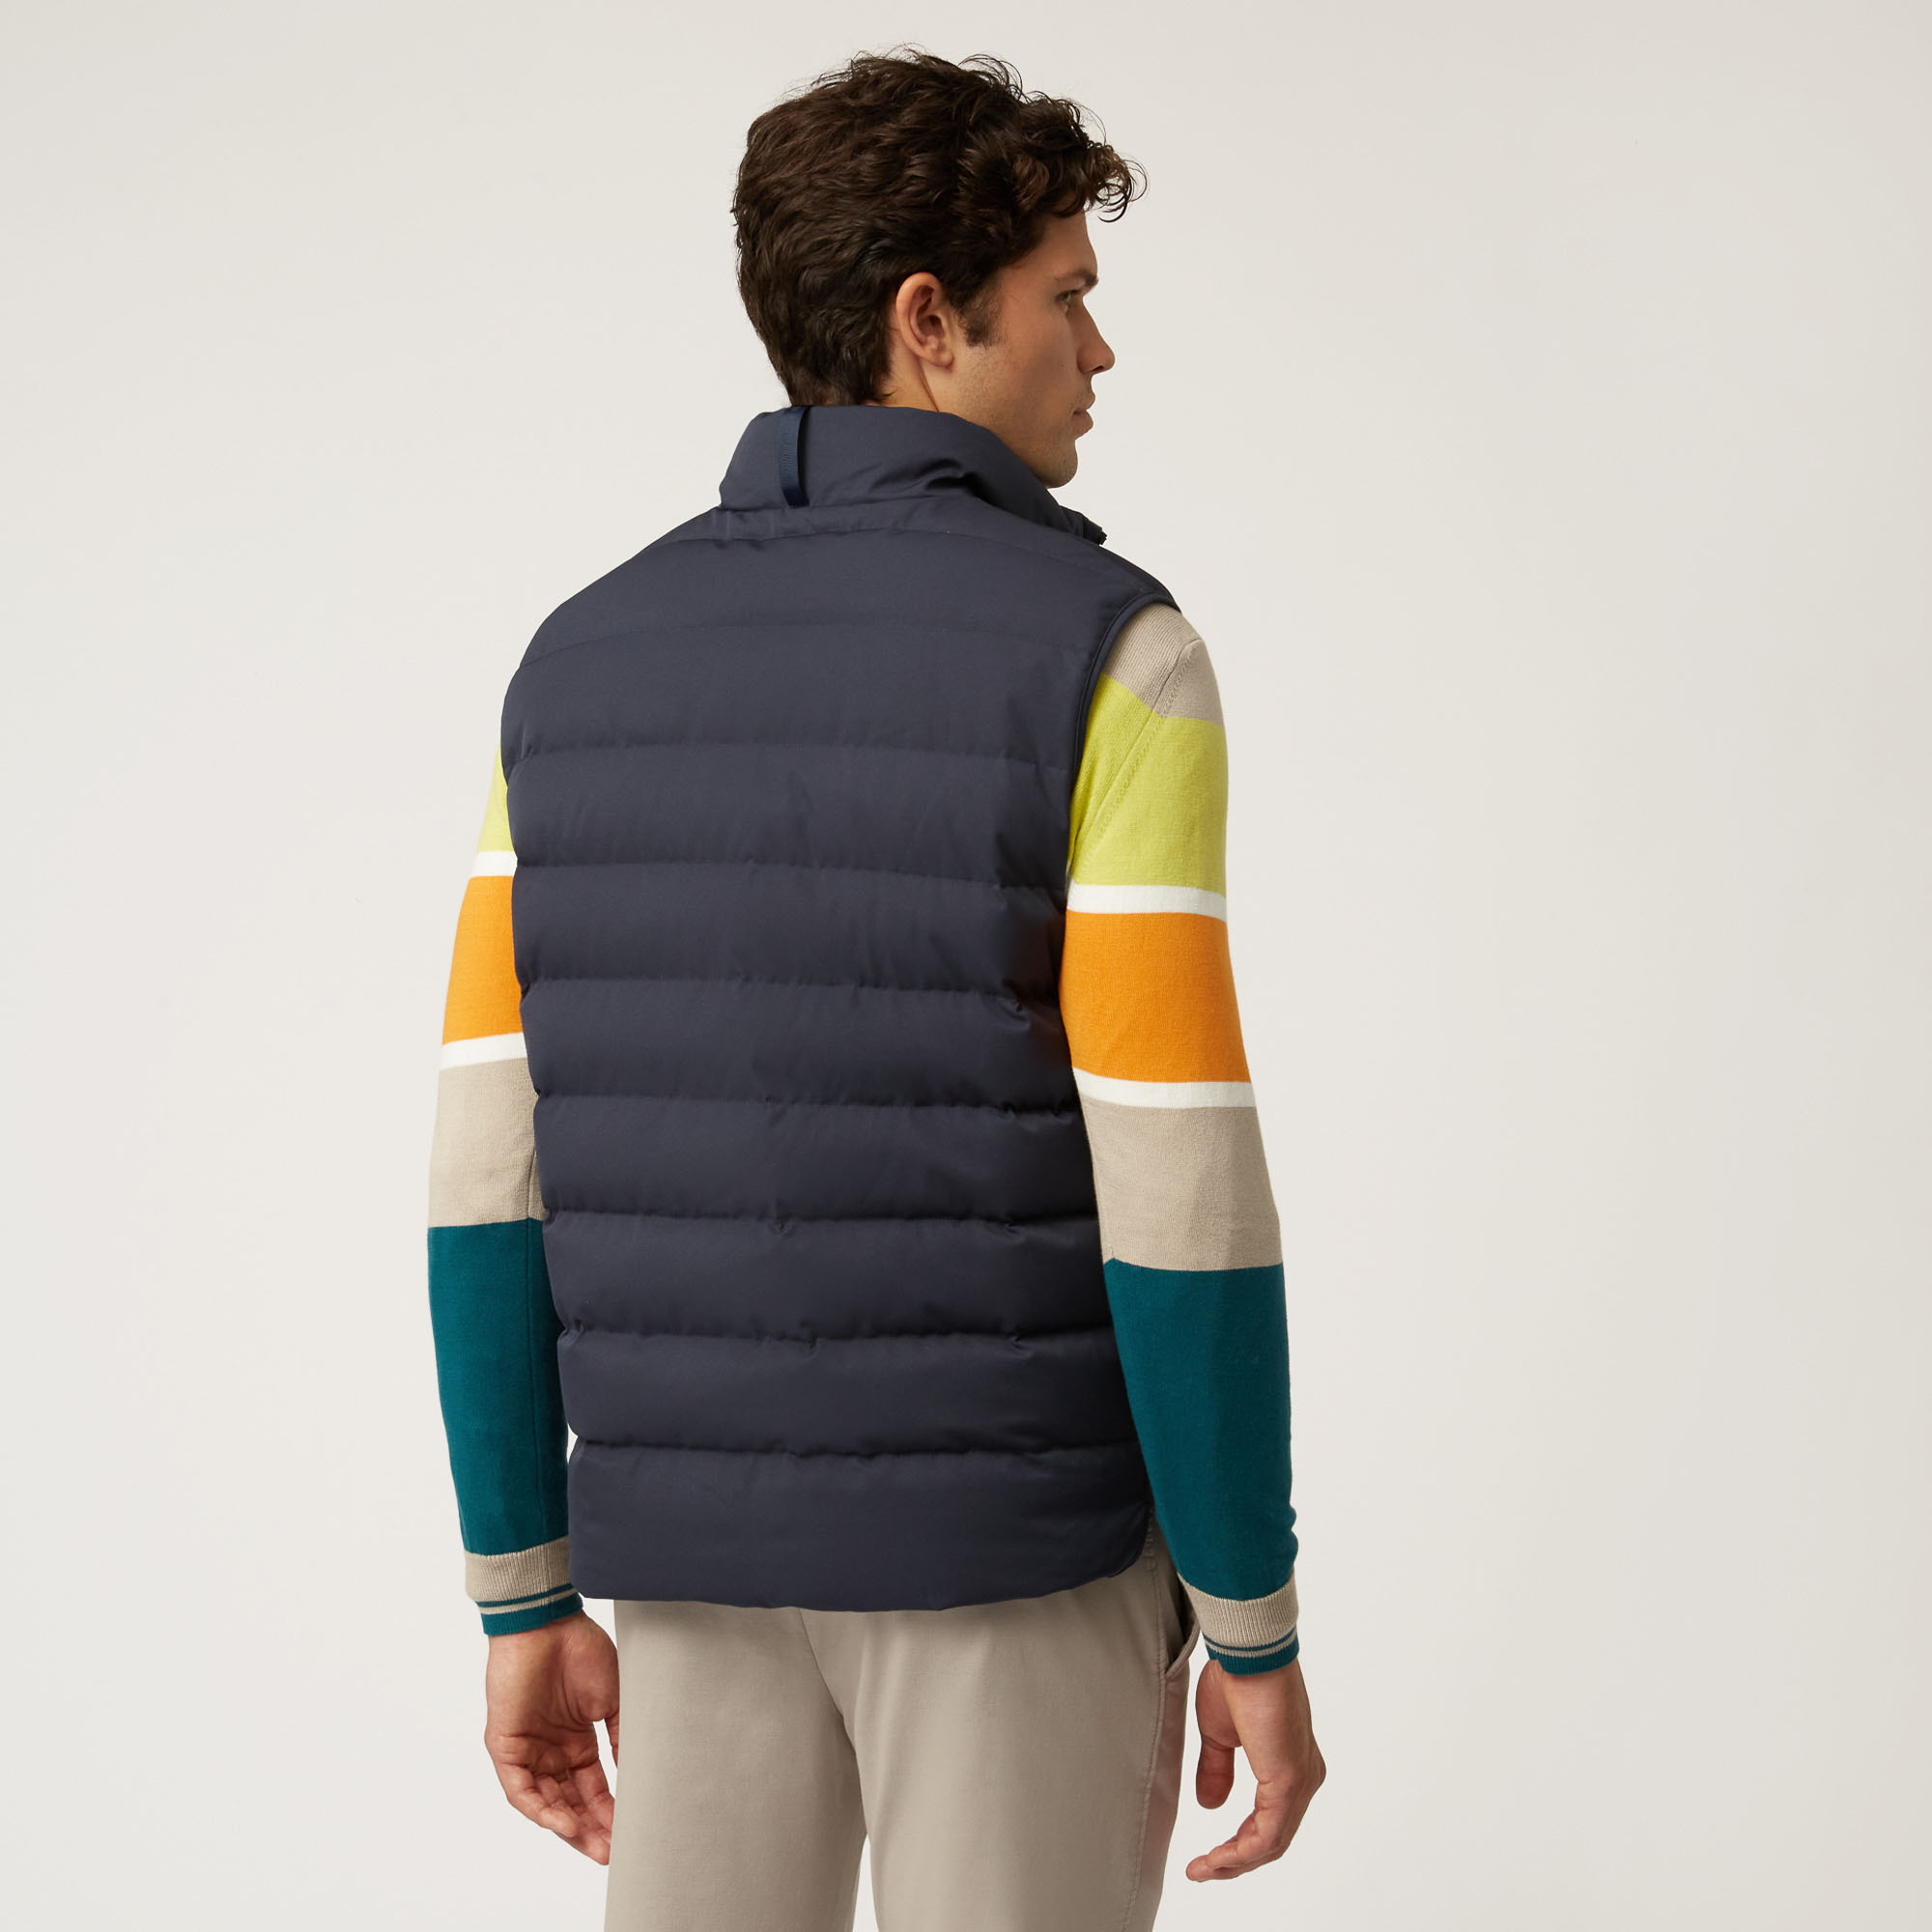 Art Academy Reversible Padded Vest, Green, large